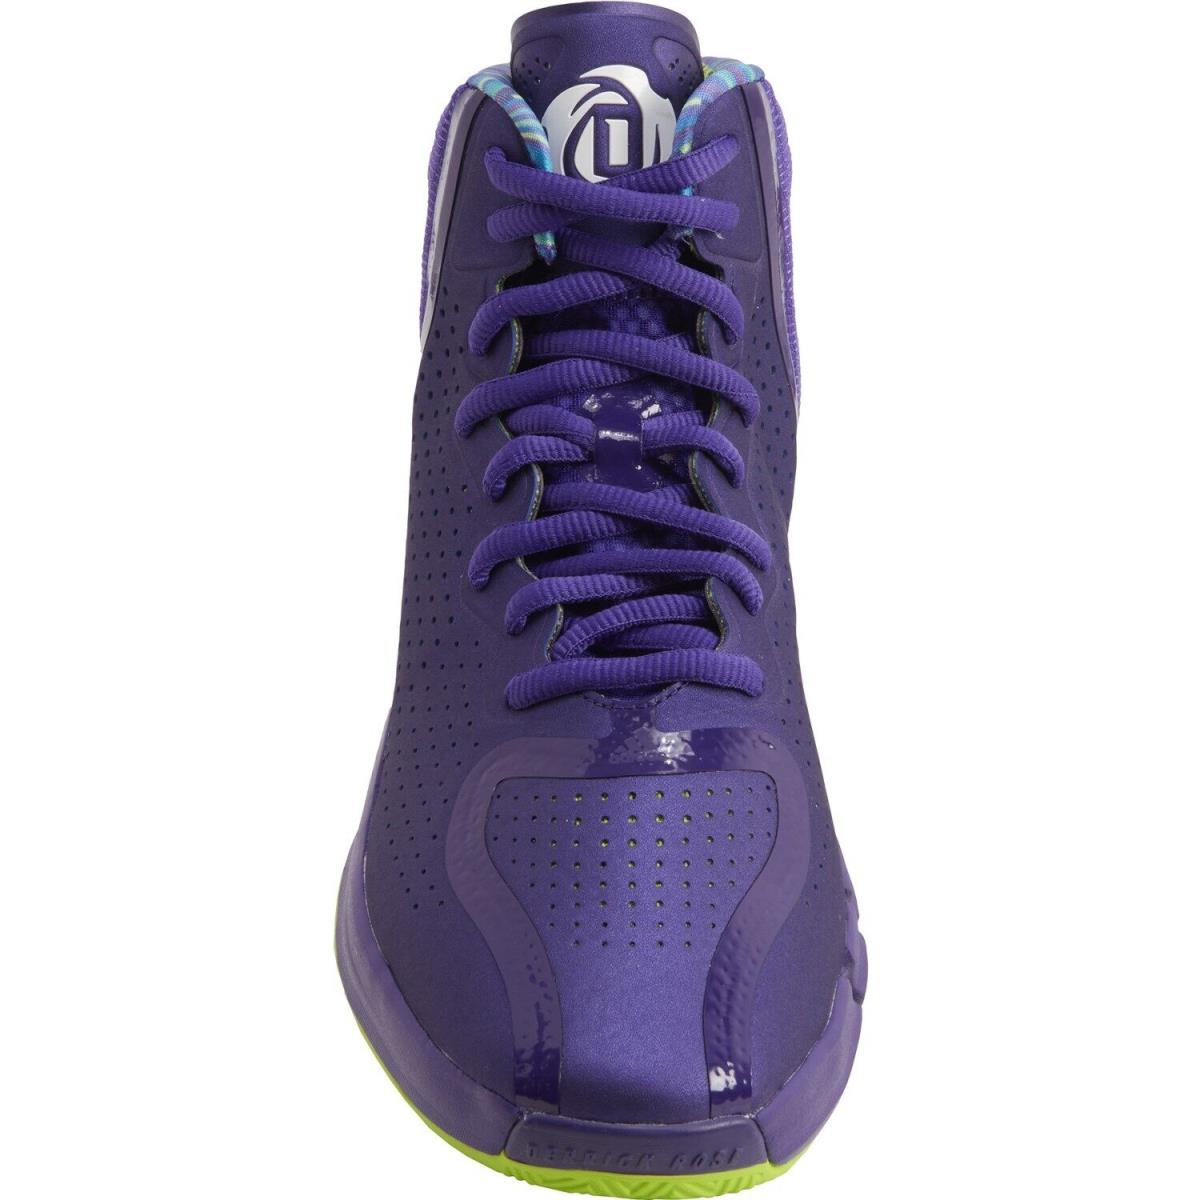 Adidas shoes Rose Restomod - Purple 3